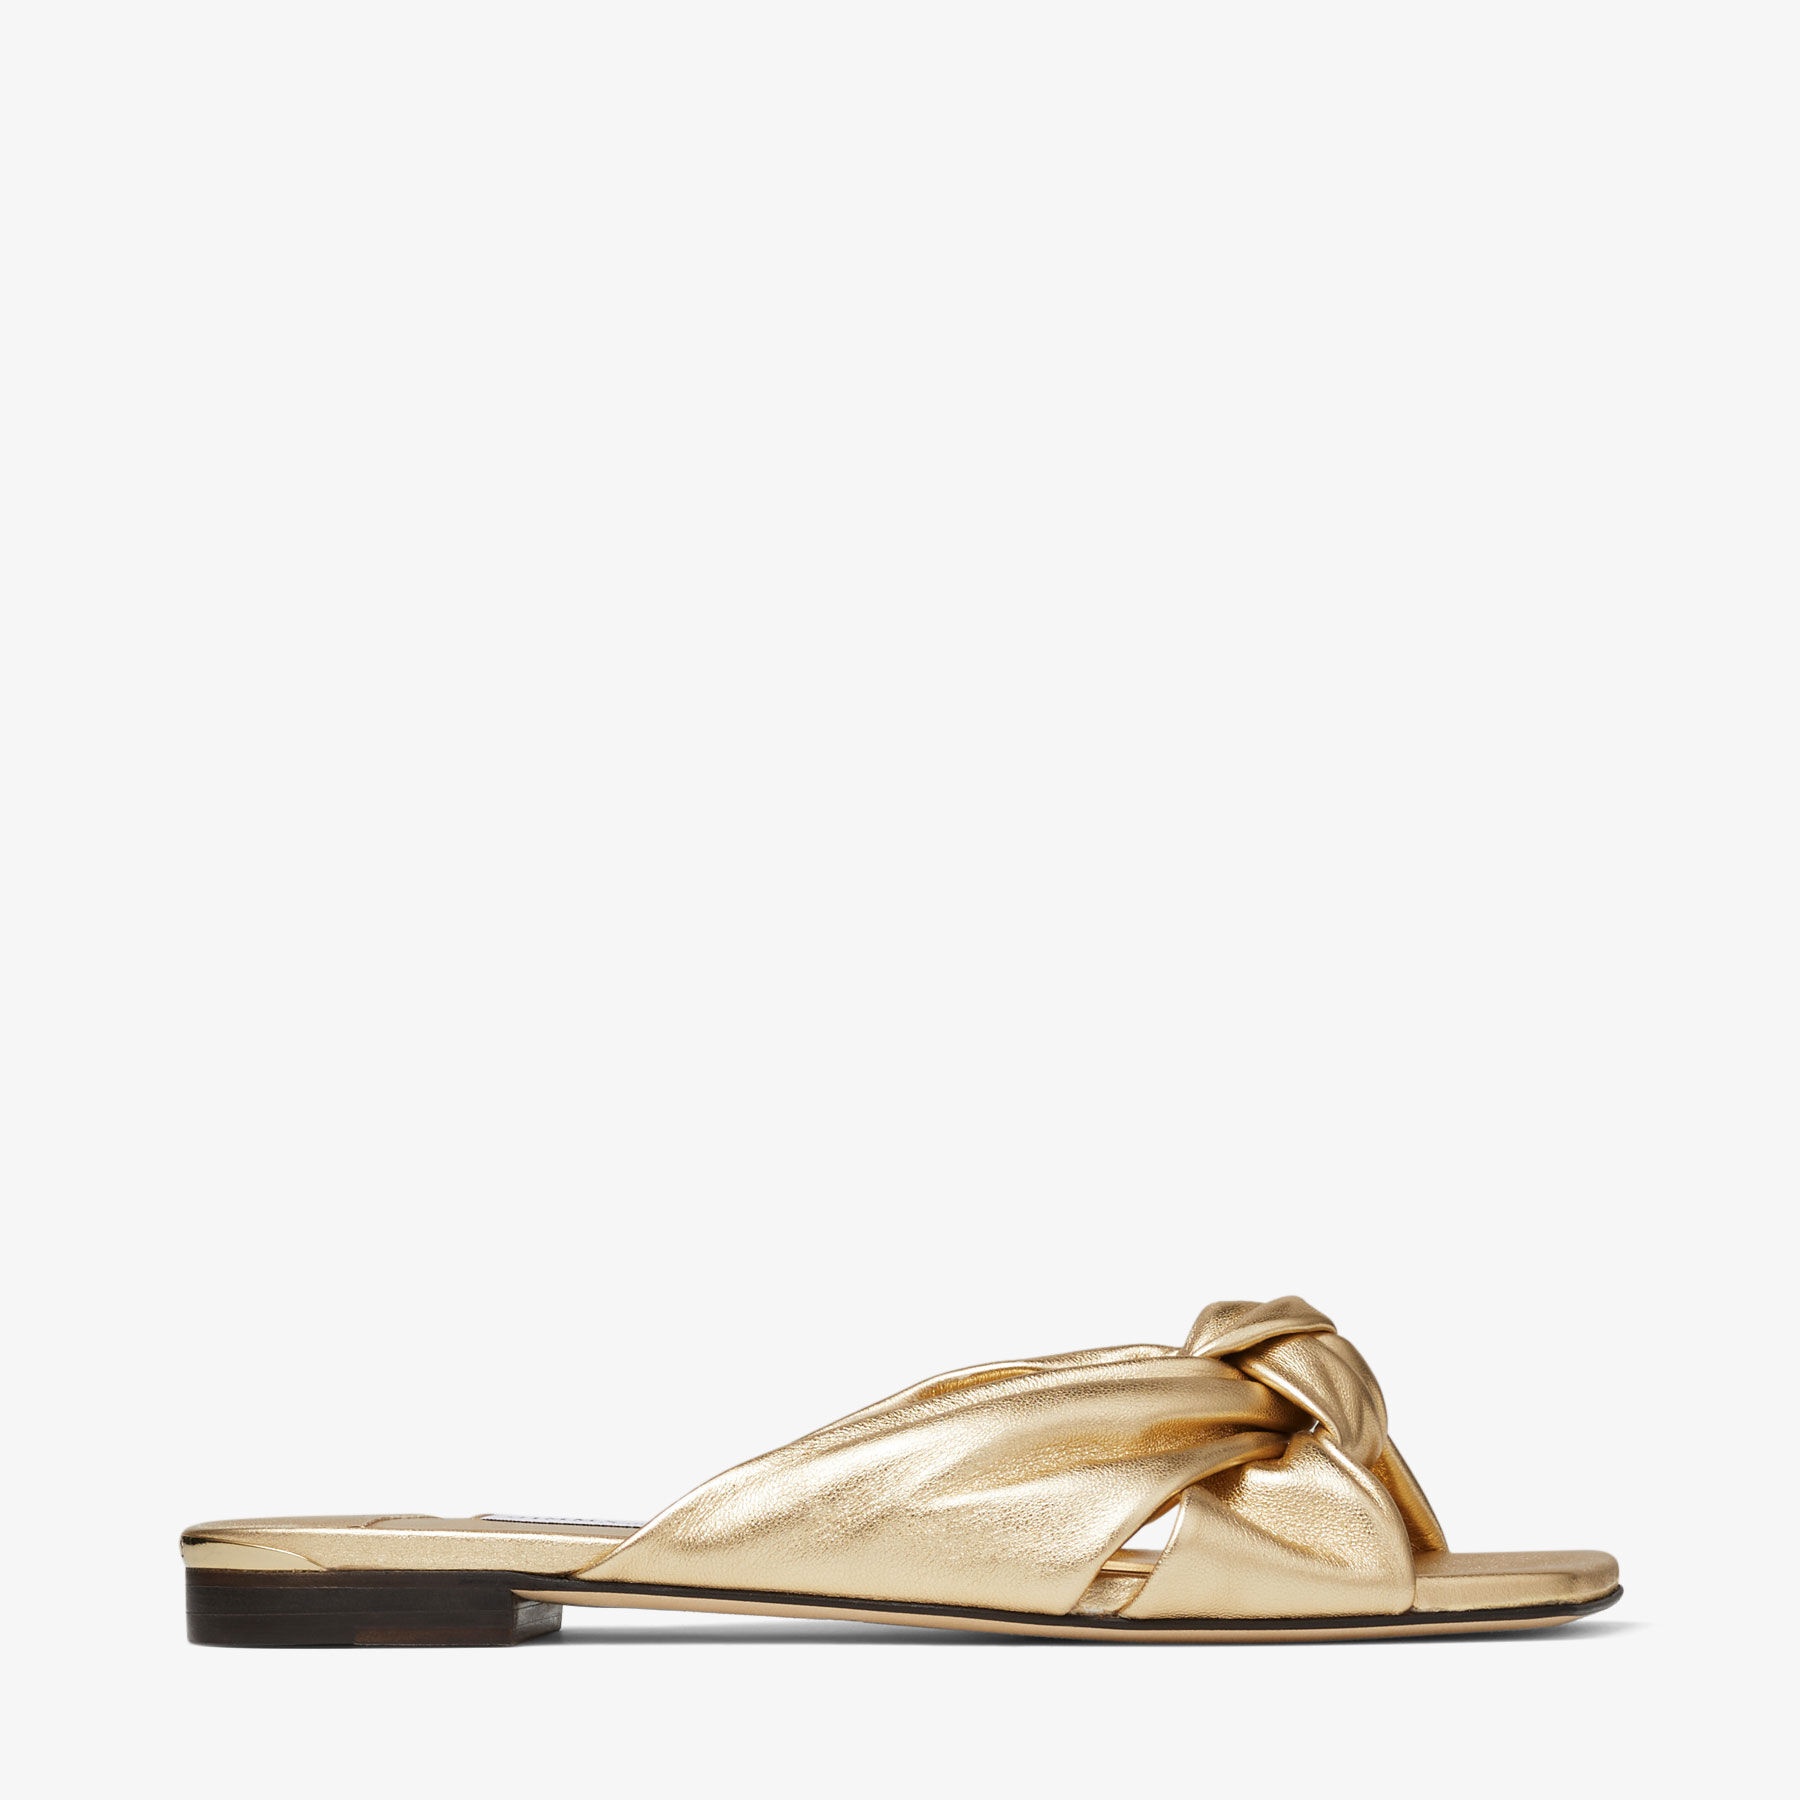 Avenue Flat
Gold Metallic Nappa Leather Flat Sandals - 1